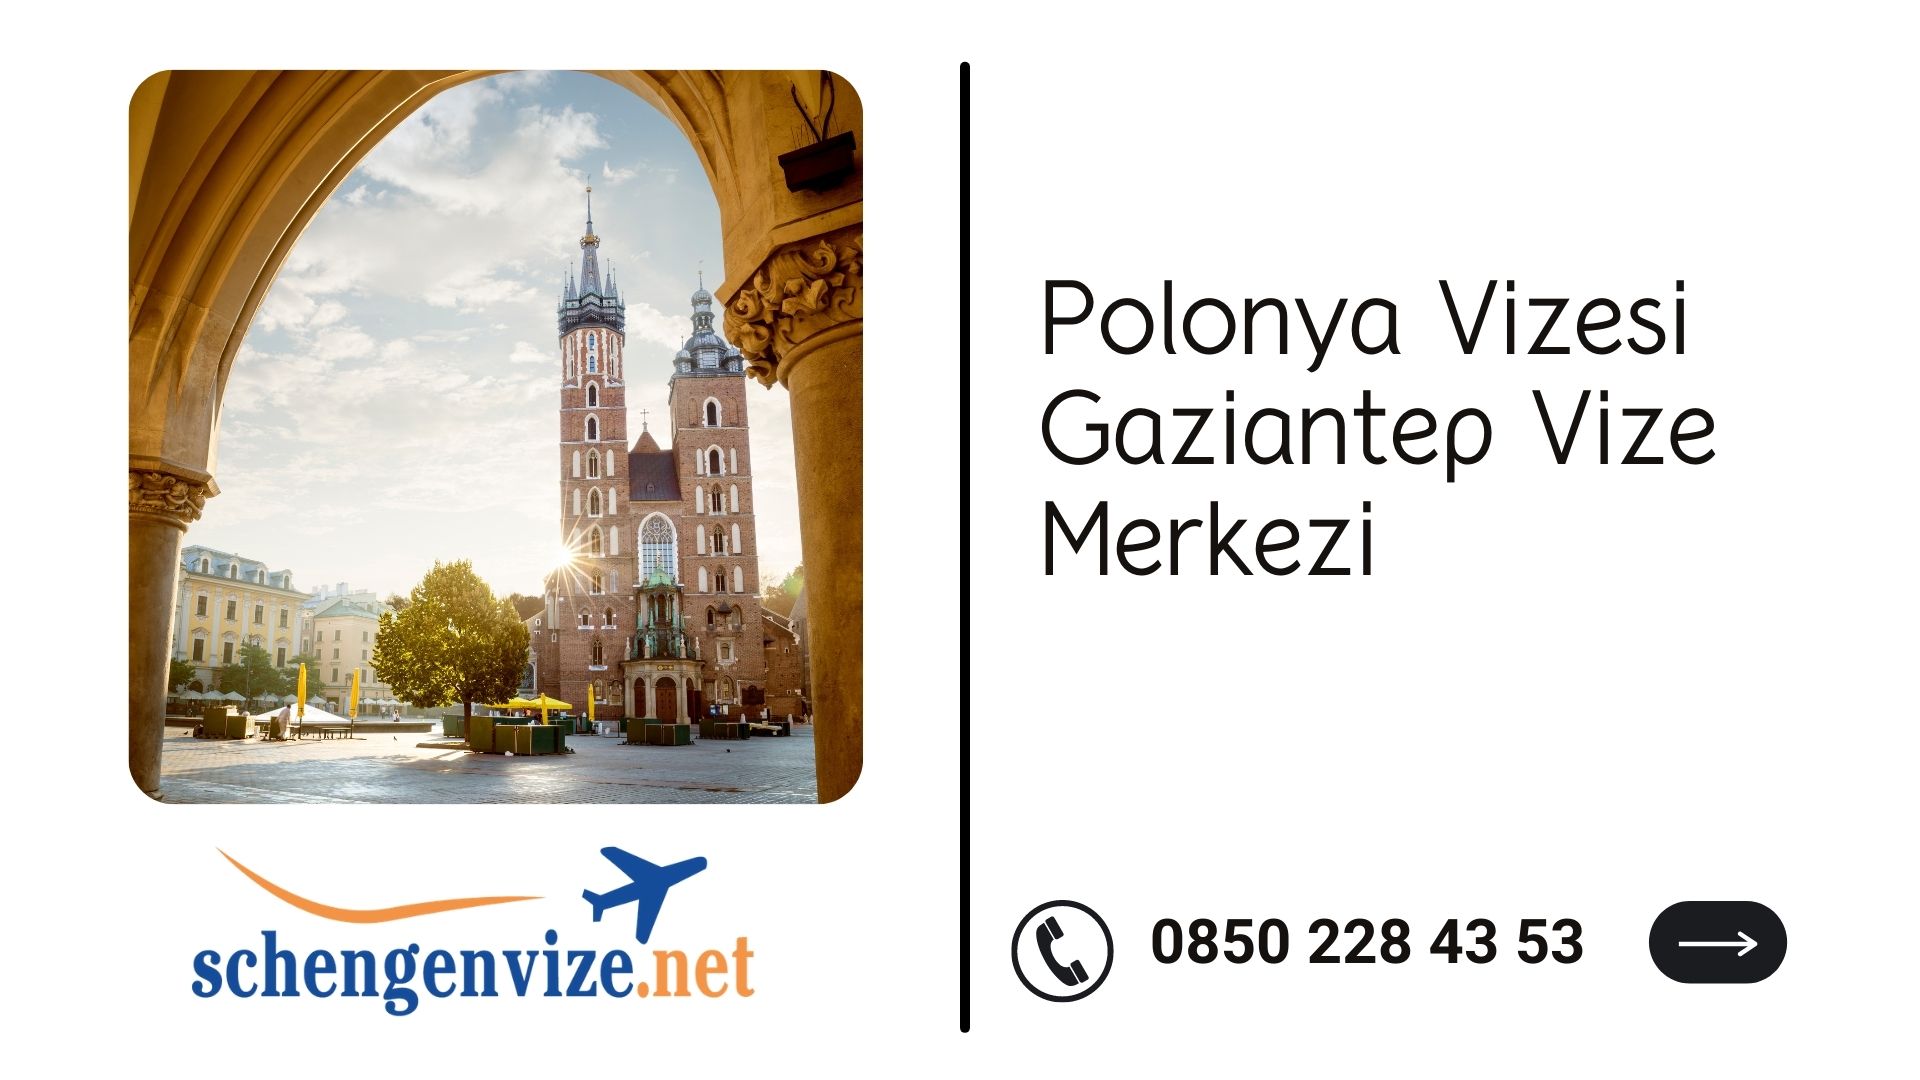 Polonya Vizesi Gaziantep Vize Merkezi